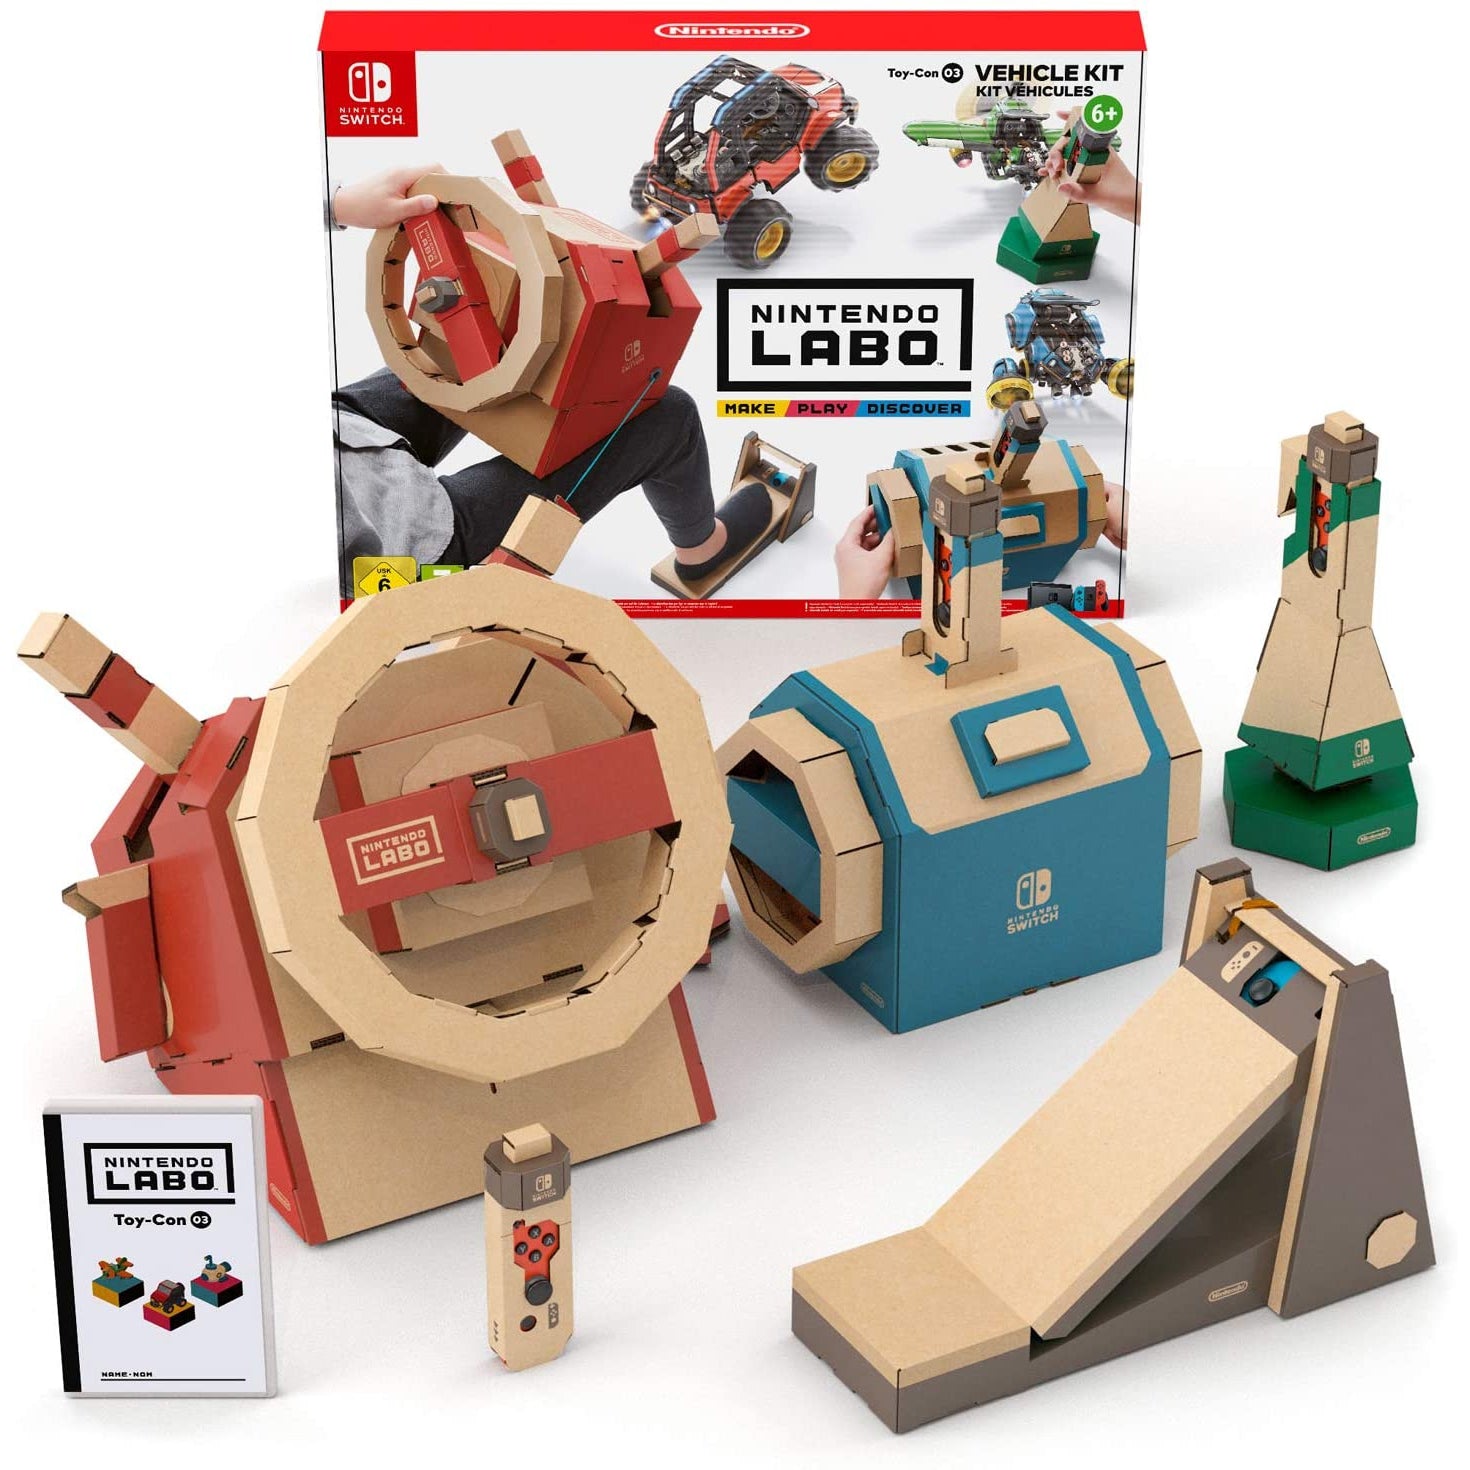 Nintendo Labo Vehicle Kit (Nintendo Switch)